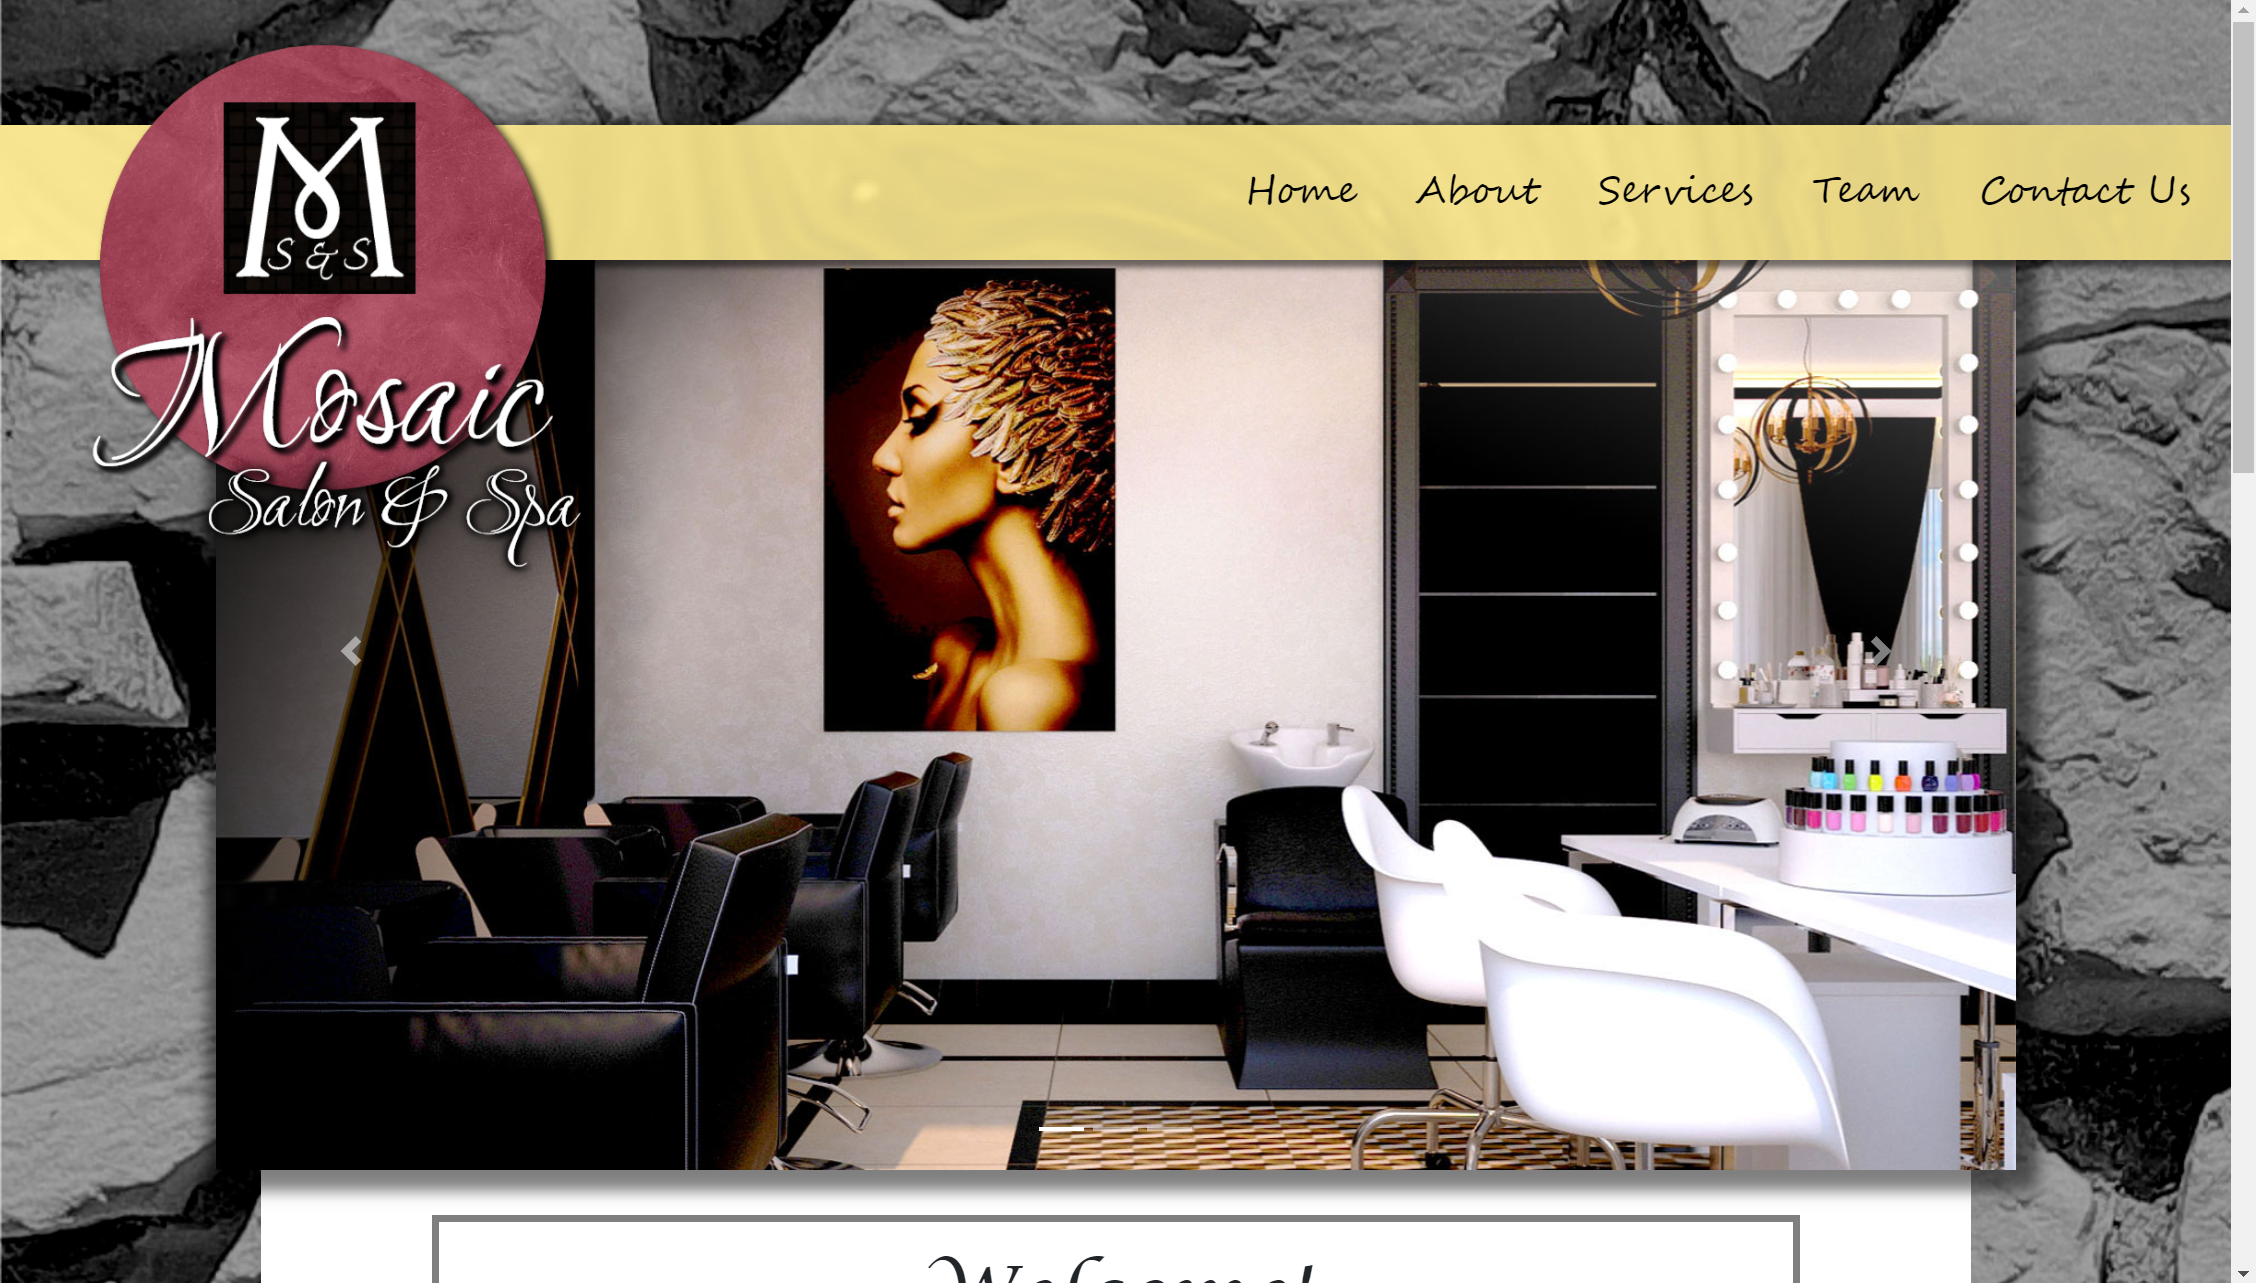 Mosaic Salon and Spa screenshot